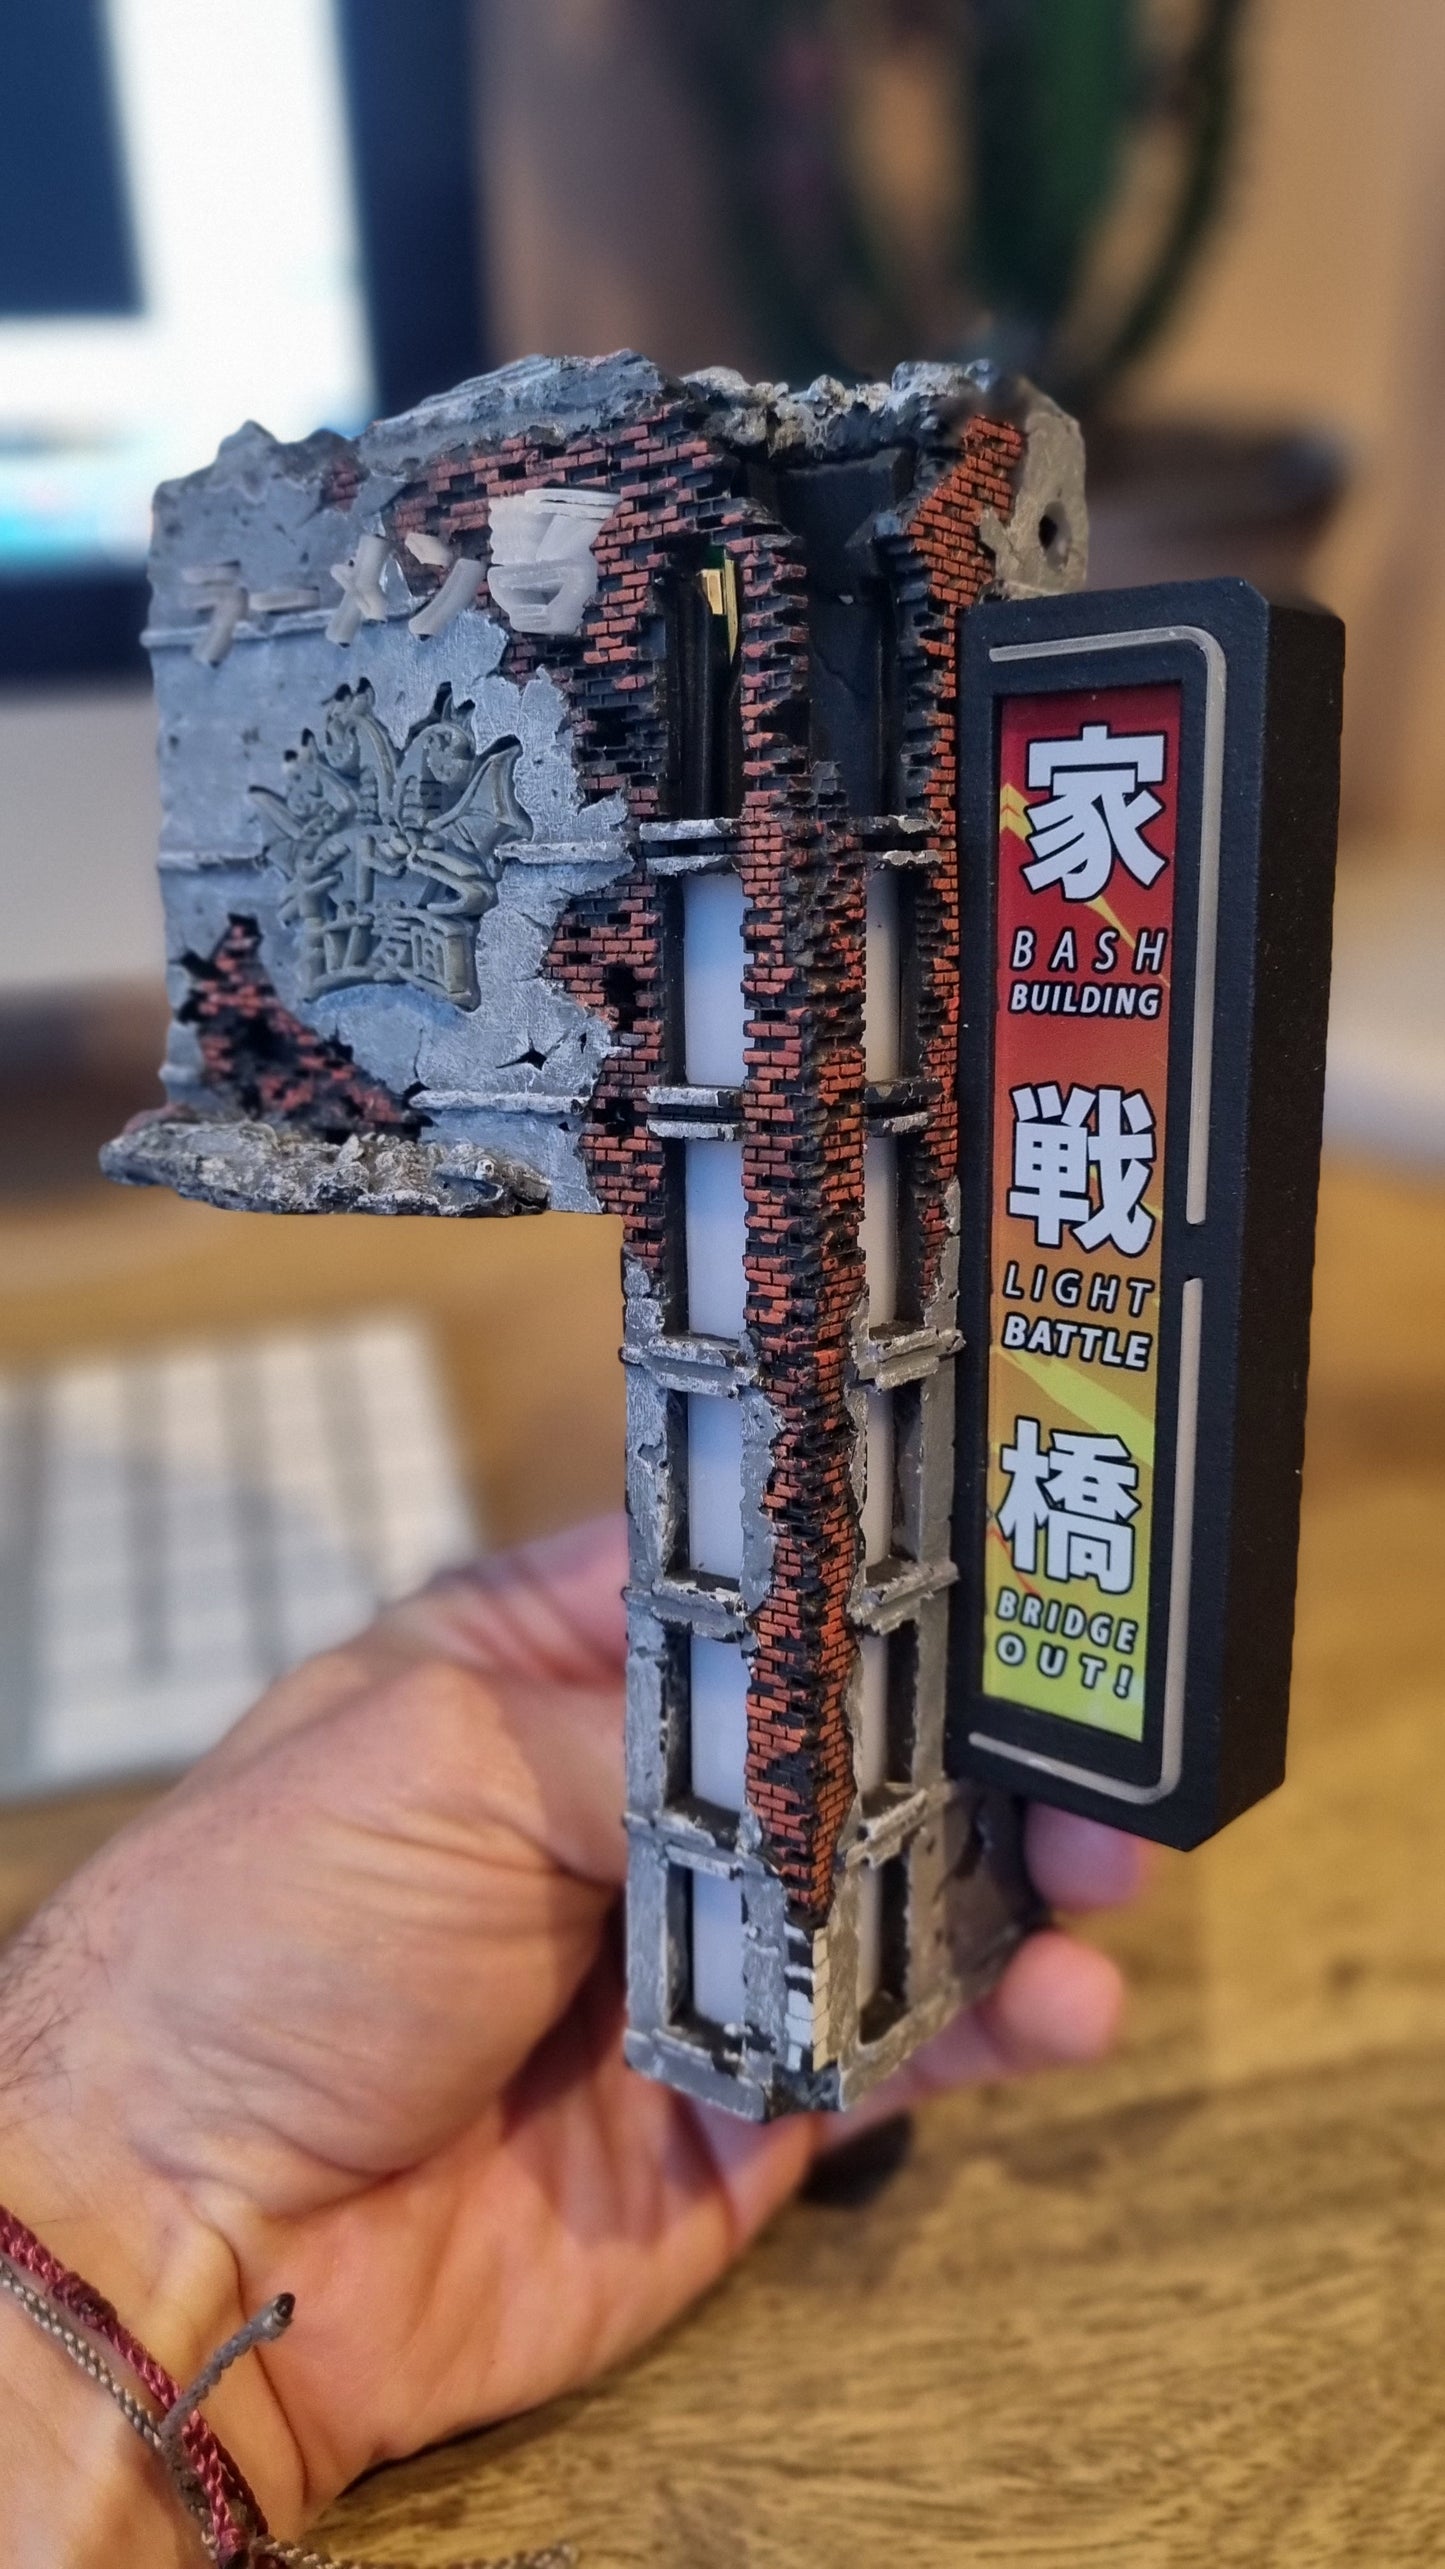 Godzilla "Noodle Bar" Building mod (Tokyo Neon #2)